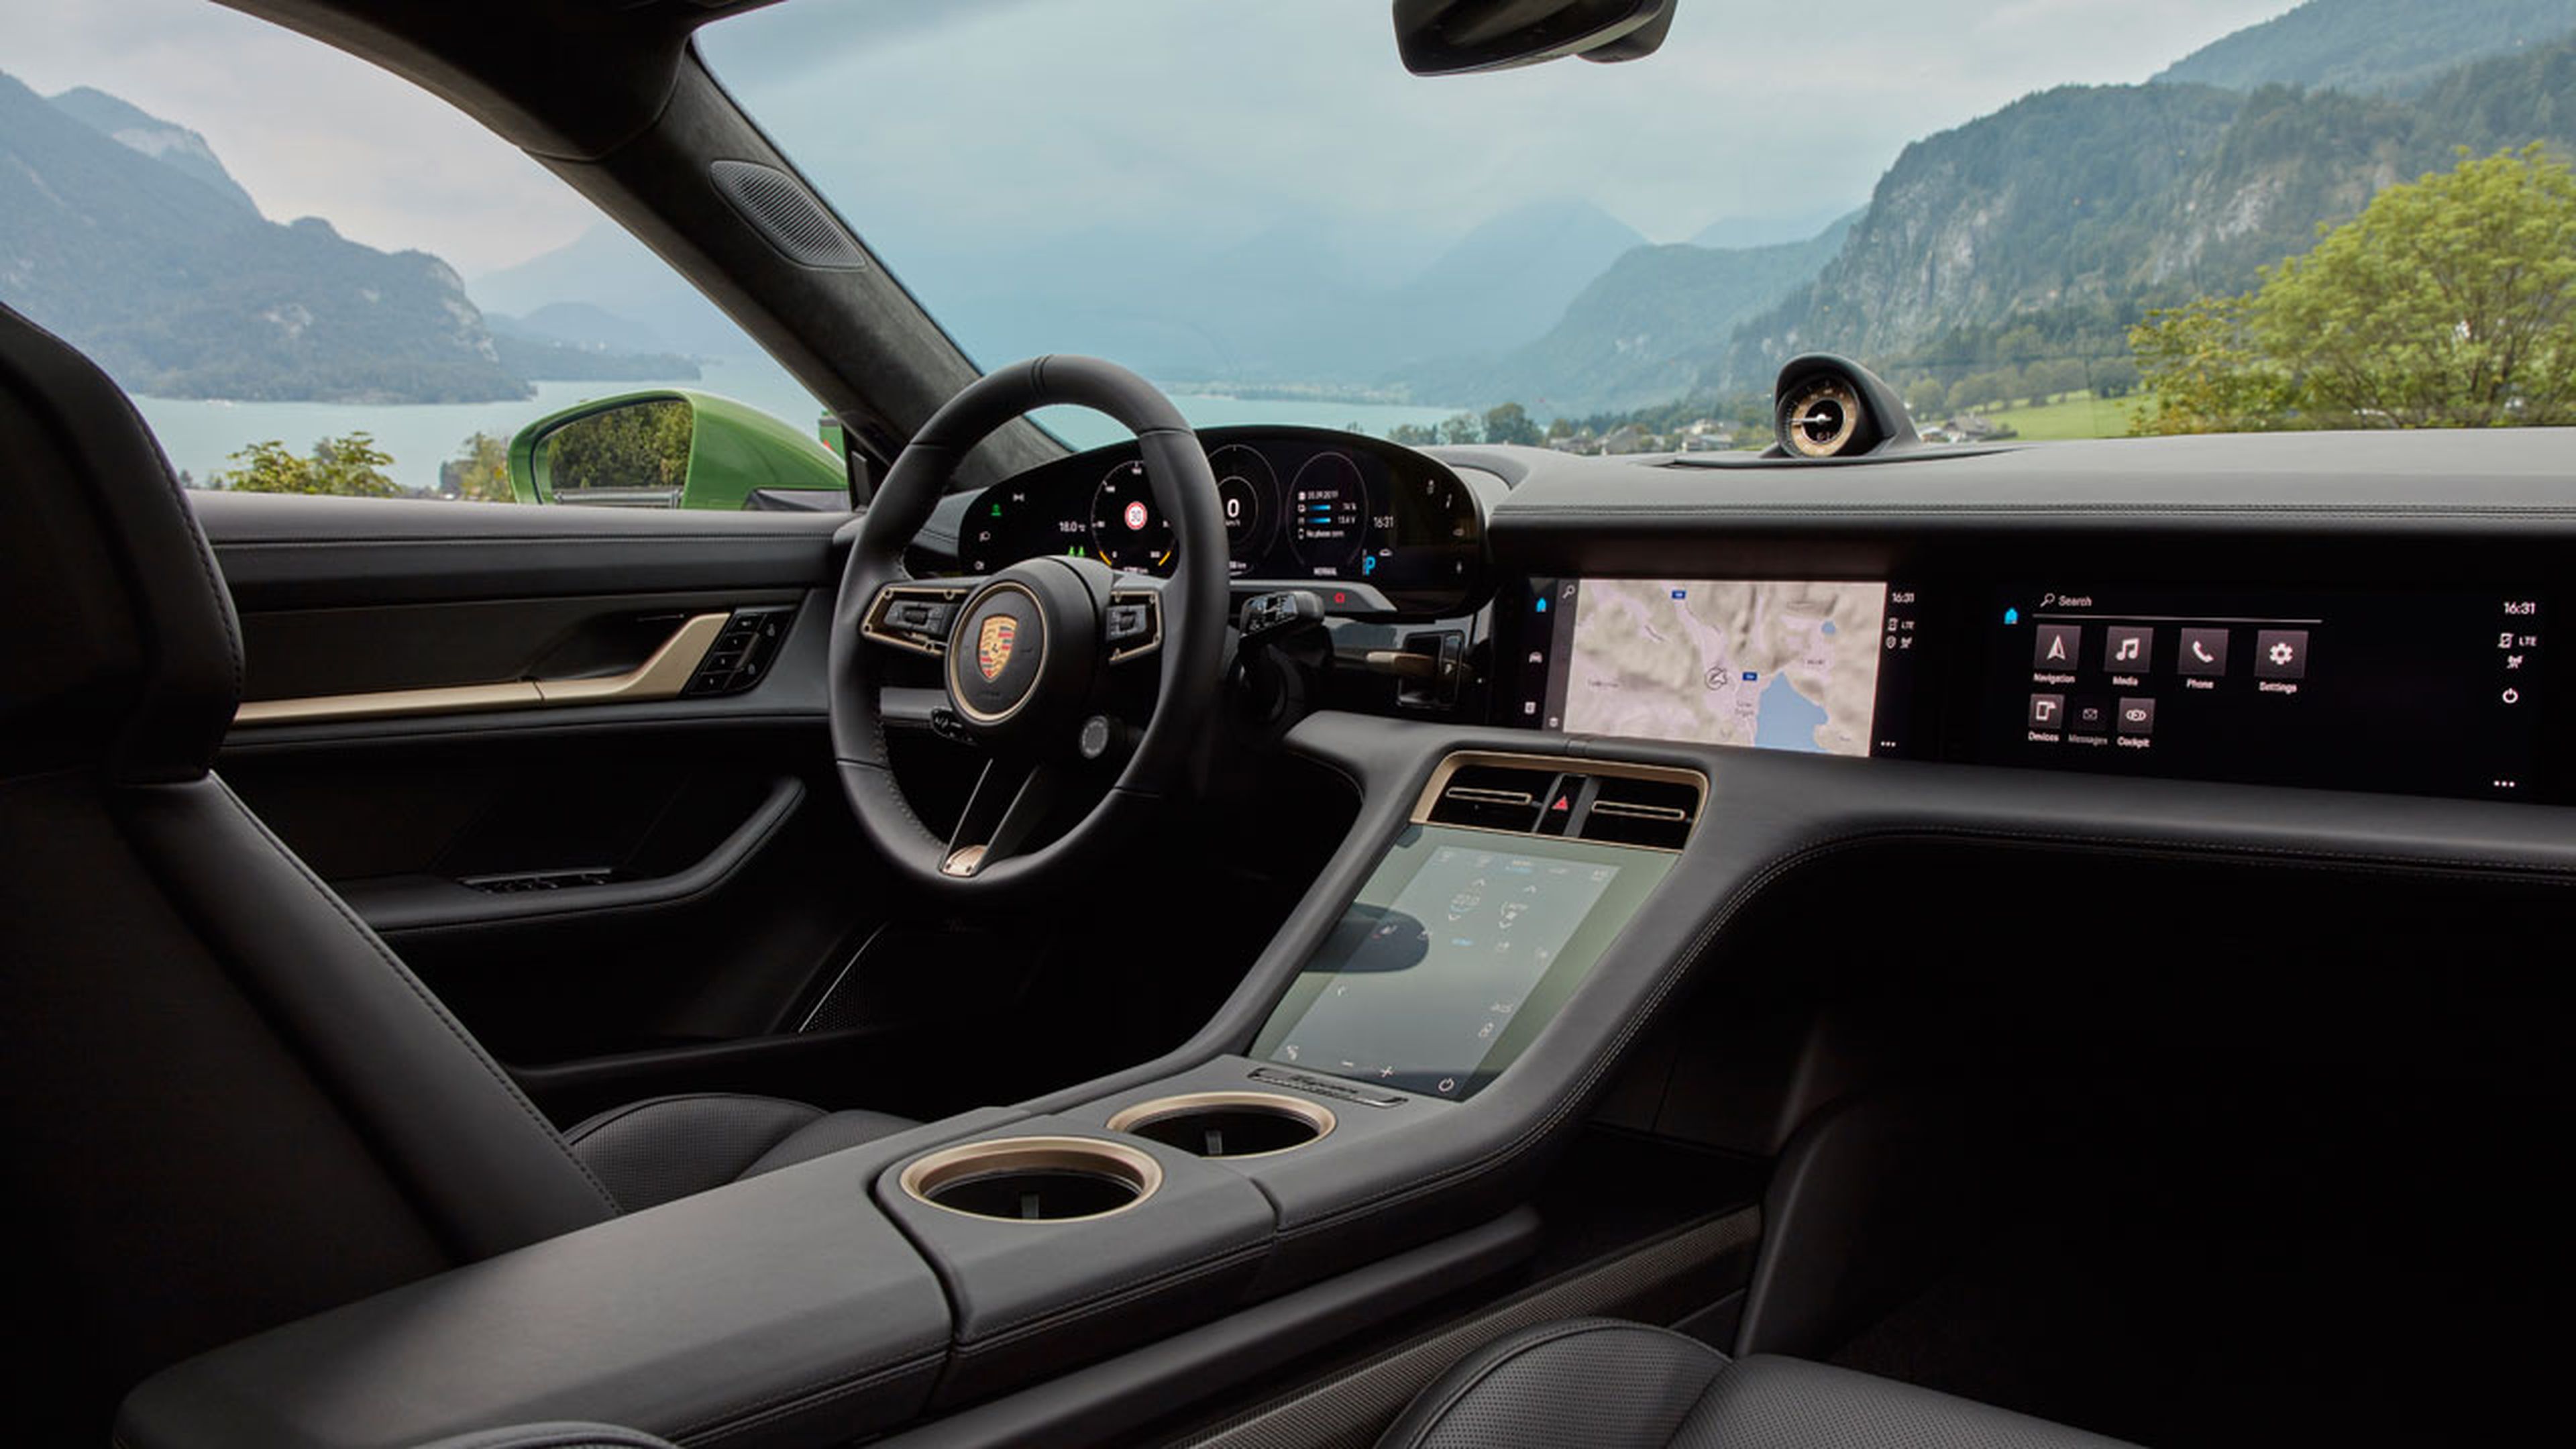 El cockpit del Porsche Taycan integra diversas pantallas digitales